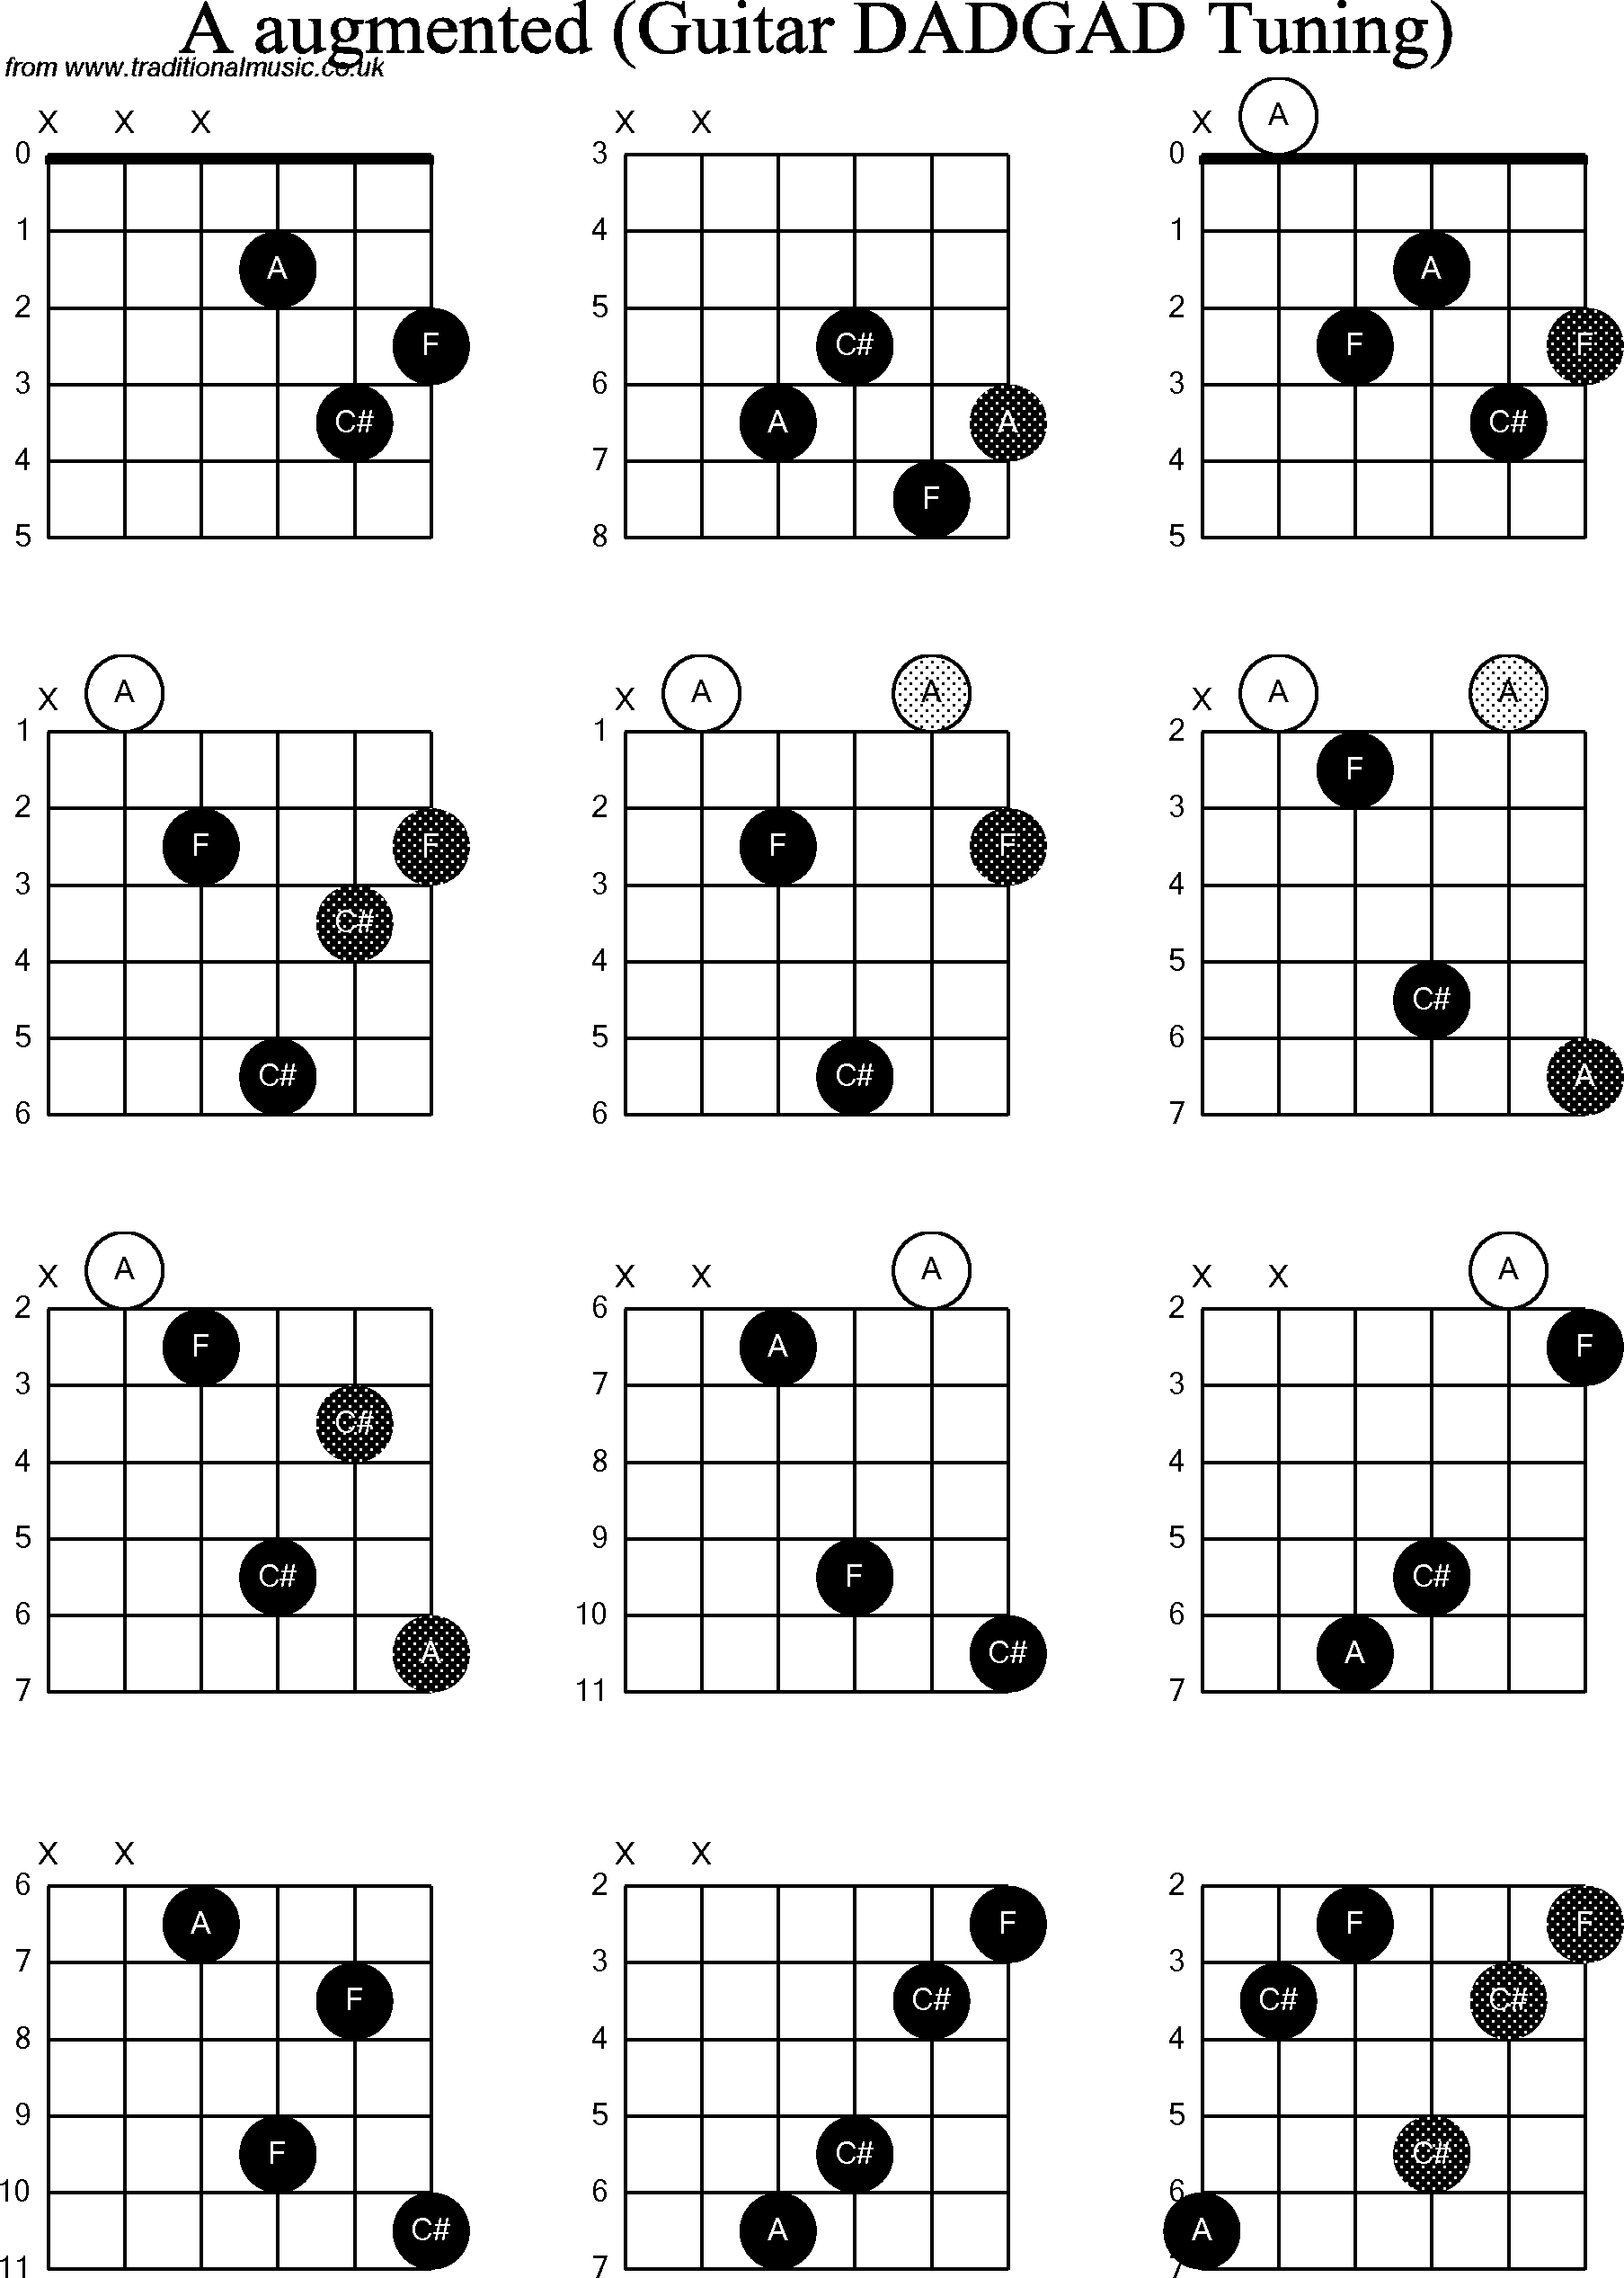 Chord diagrams for D Modal Guitar( DADGAD), A Augmented